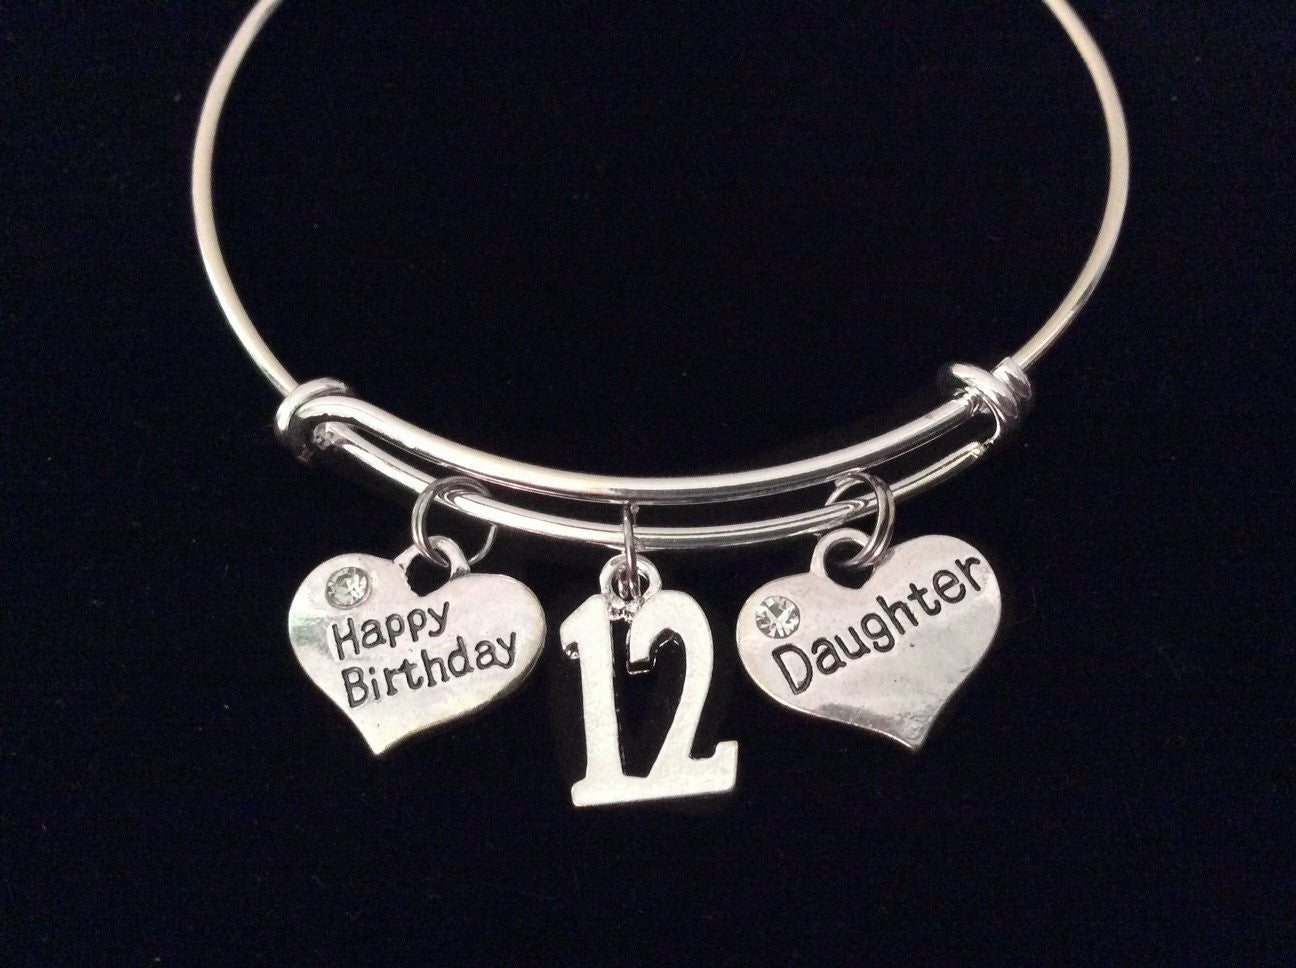 Daughter Happy Birthday 12th Expandable Charm Bracelet Adjustabl